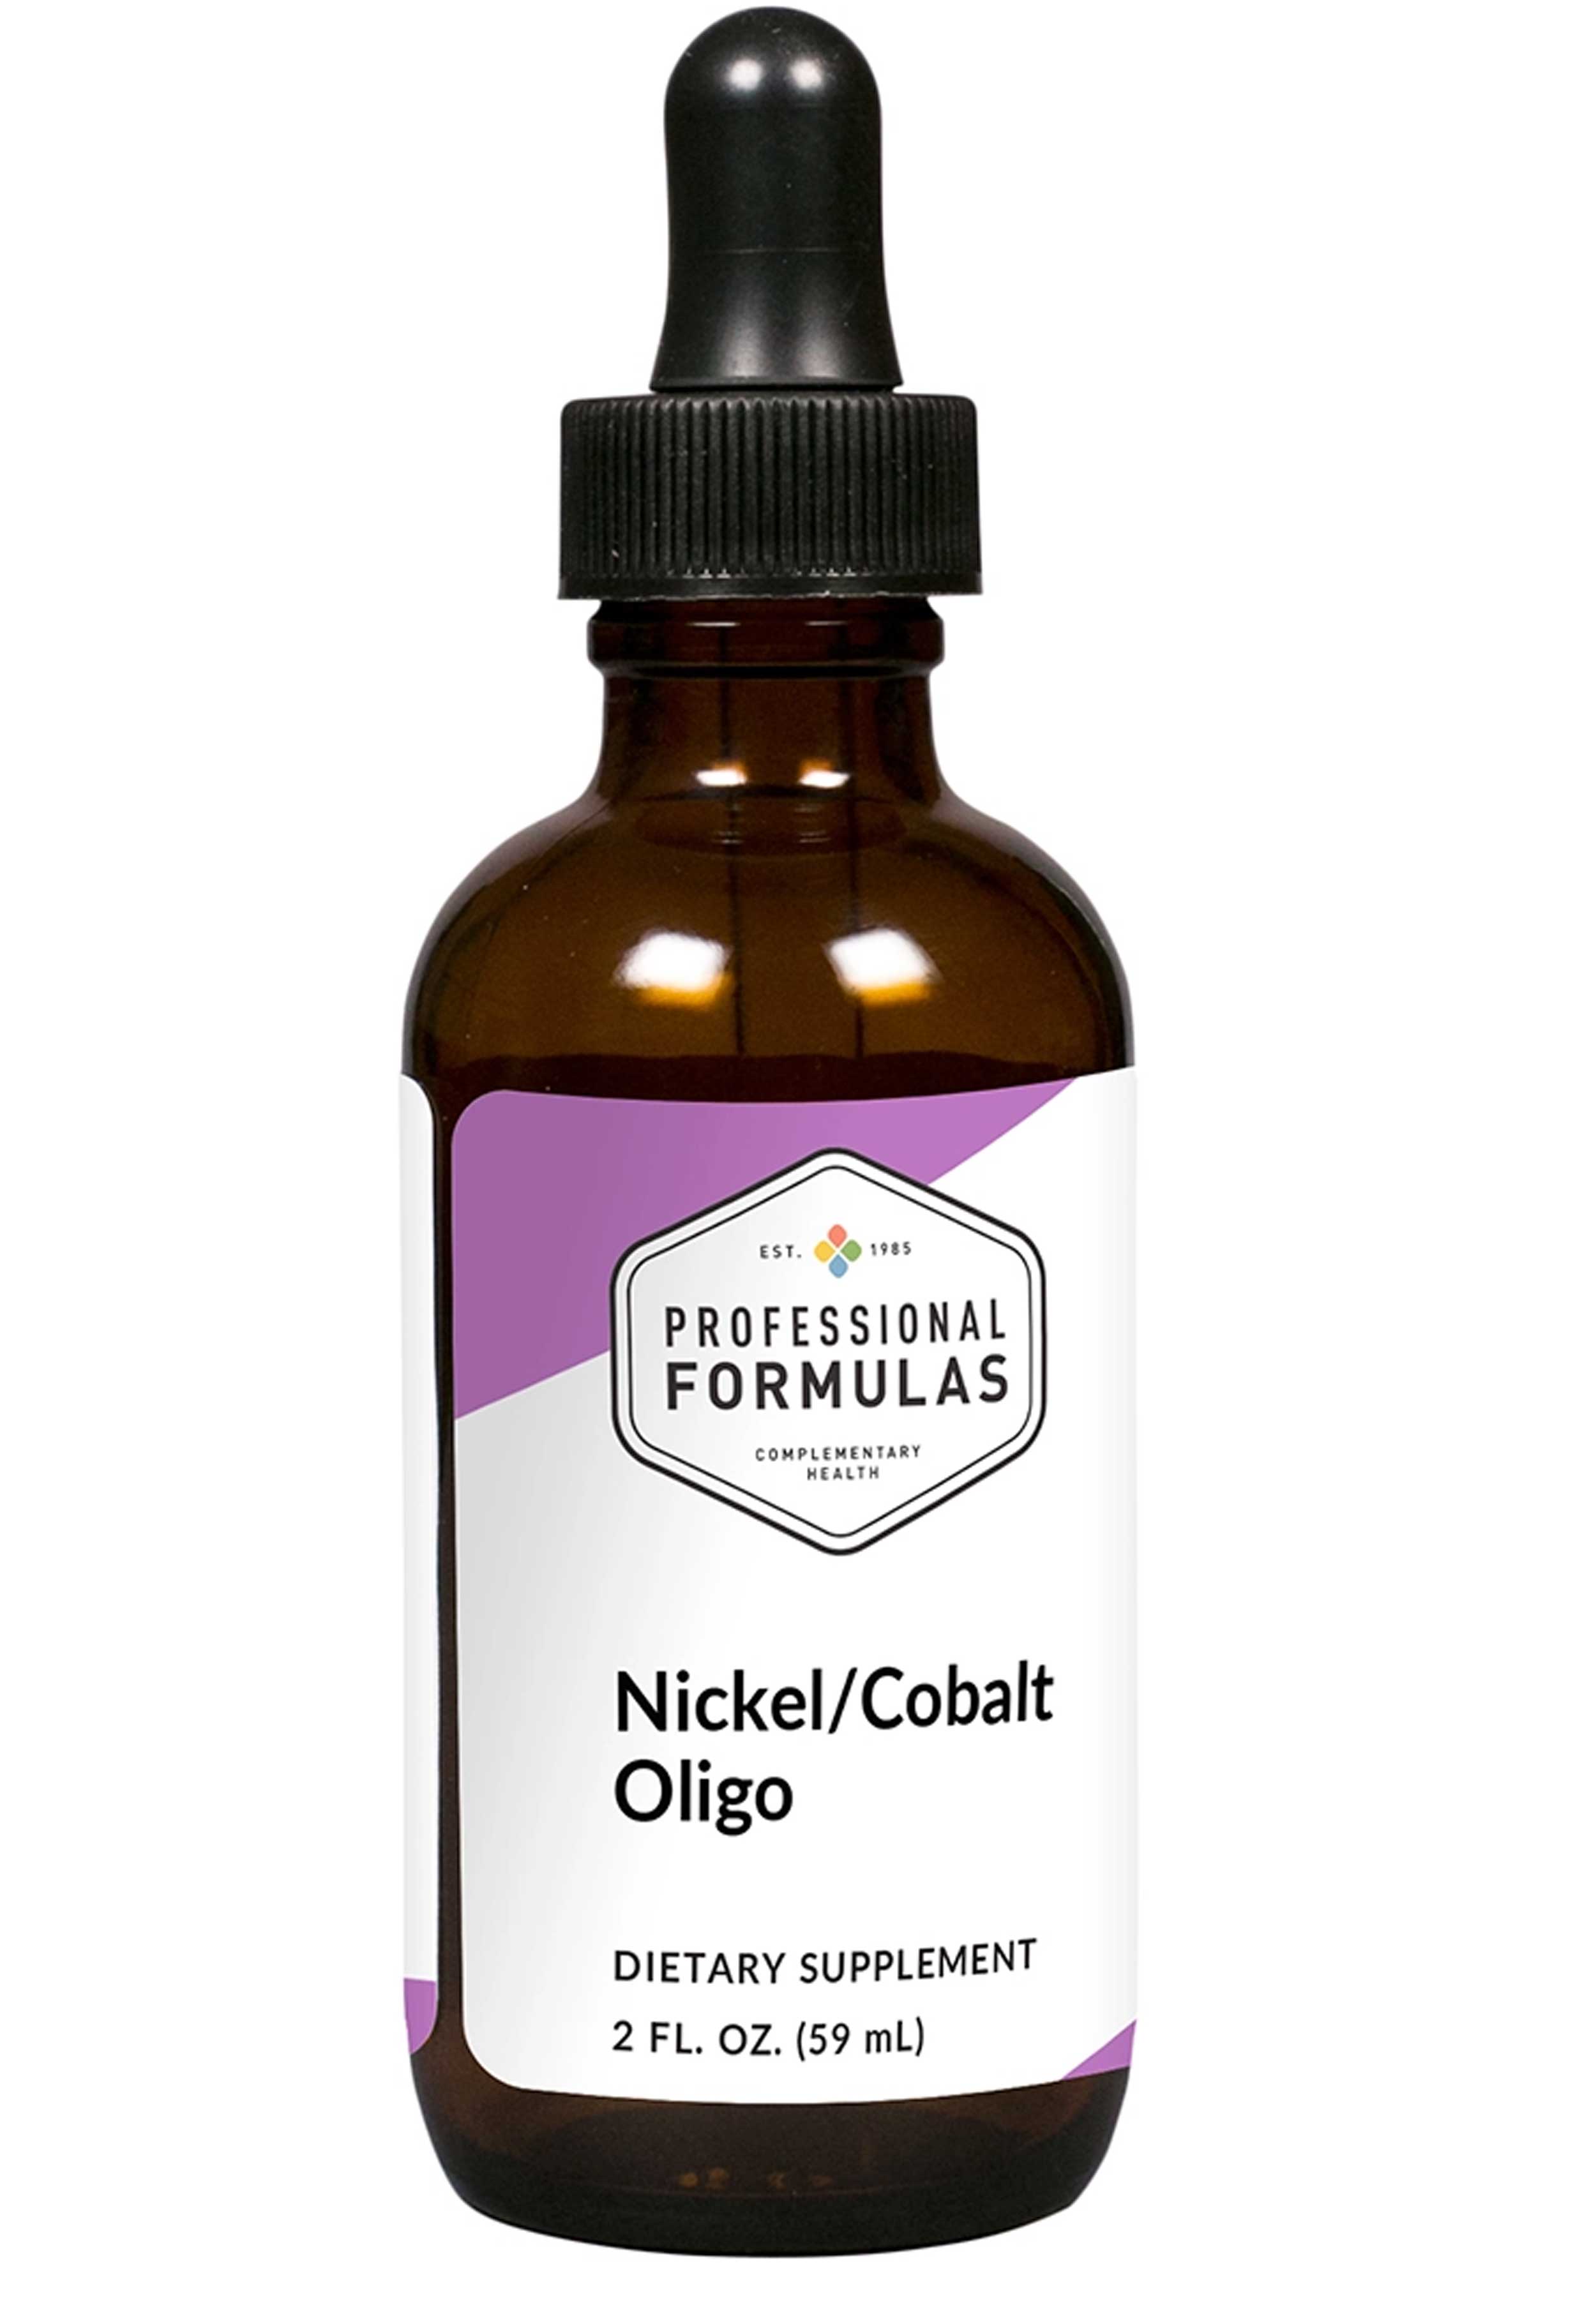 Professional Formulas NI-CO Nickel/Cobalt (Oligo Element)